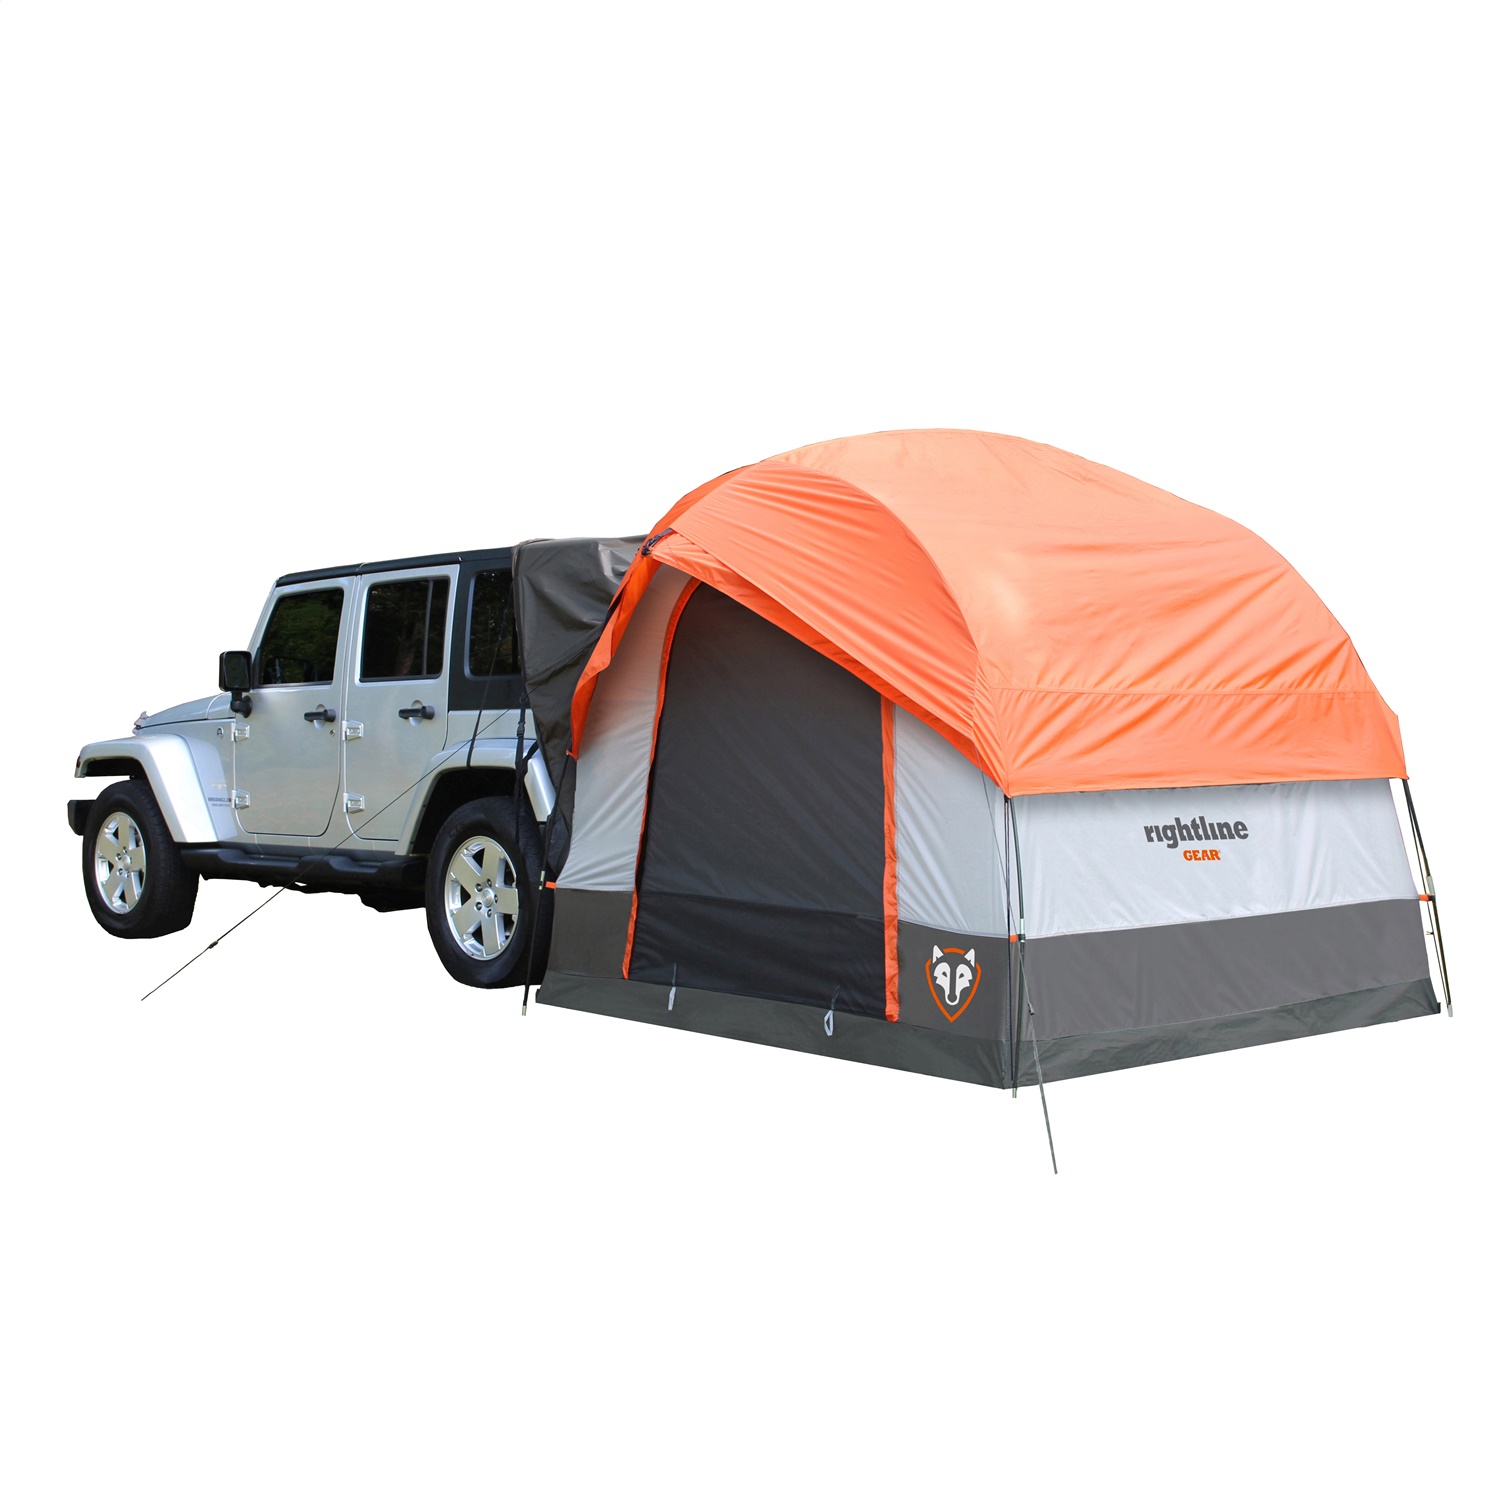 Rightline Gear Weatherproof SUV/Wagon/Jeep 4 Person Tent 110907 